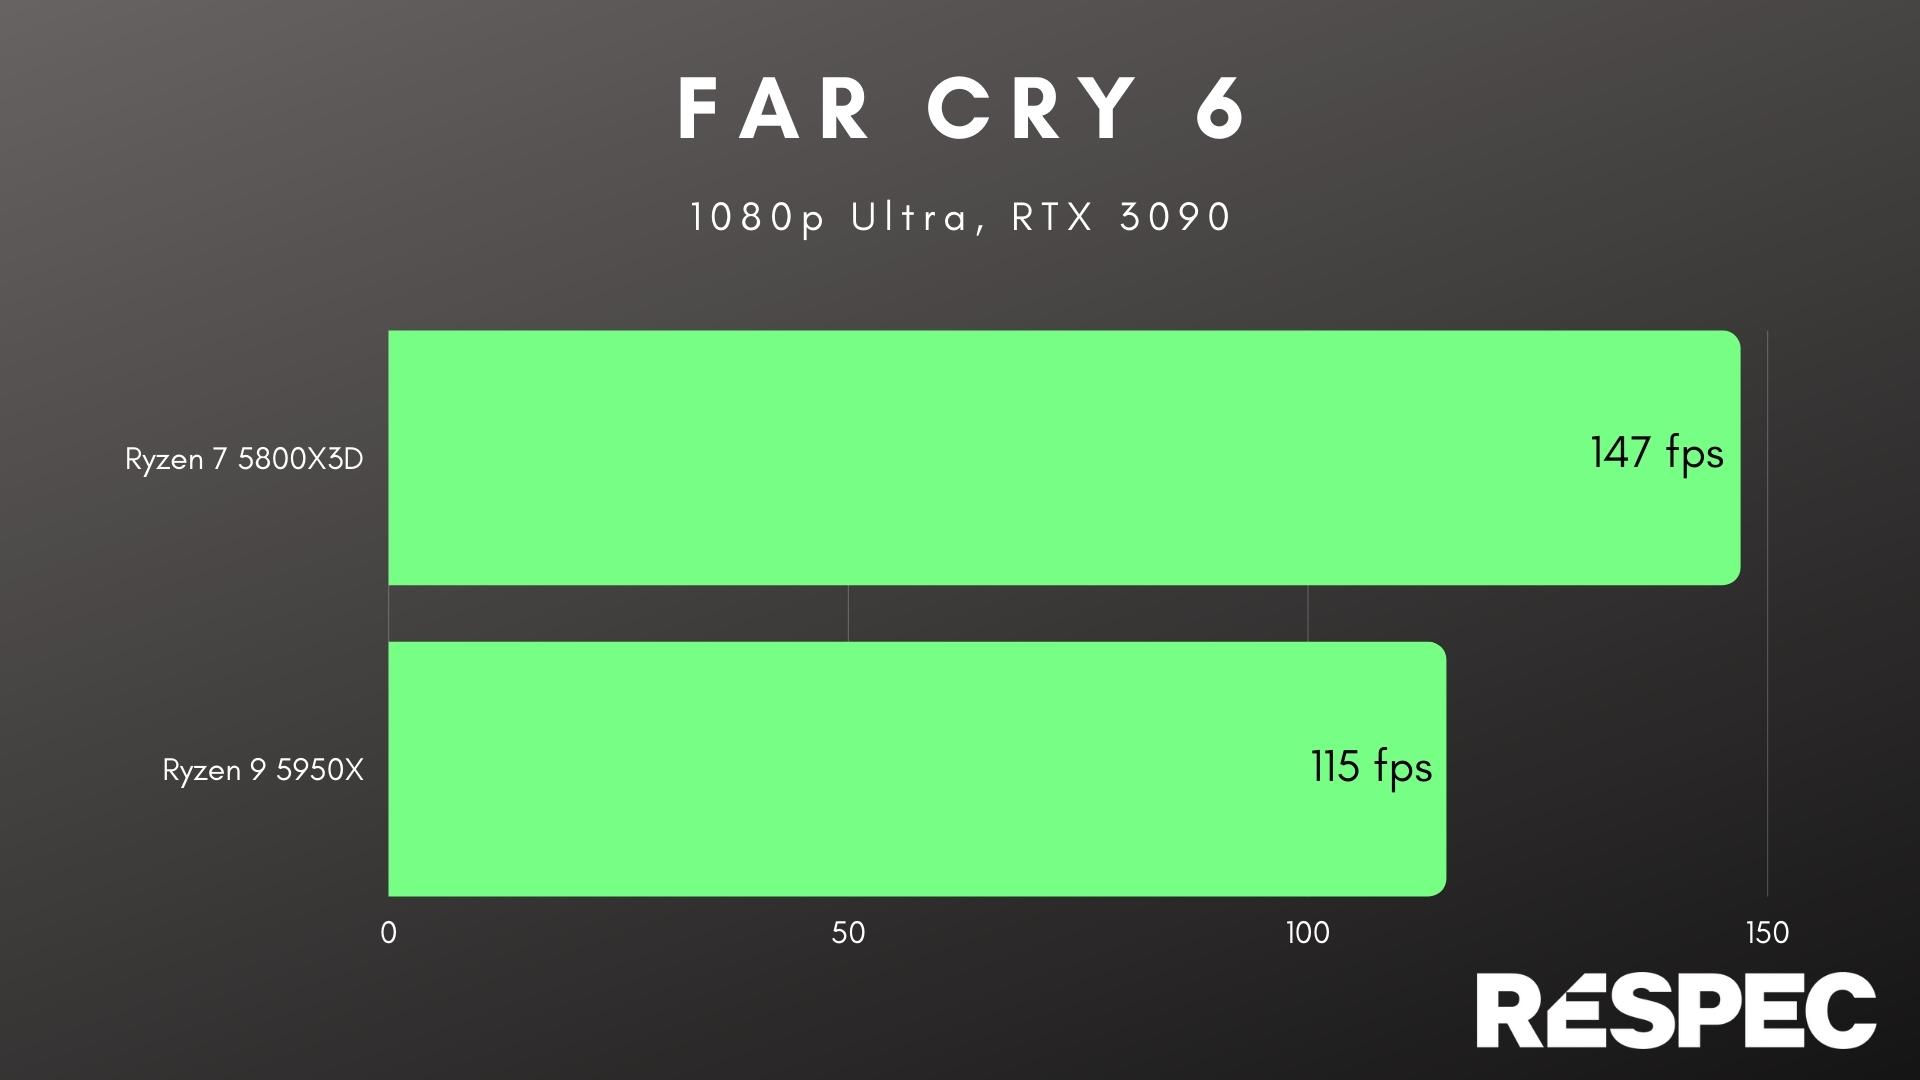 Ryzen 7 5800X3D performance in Far Cry 6.